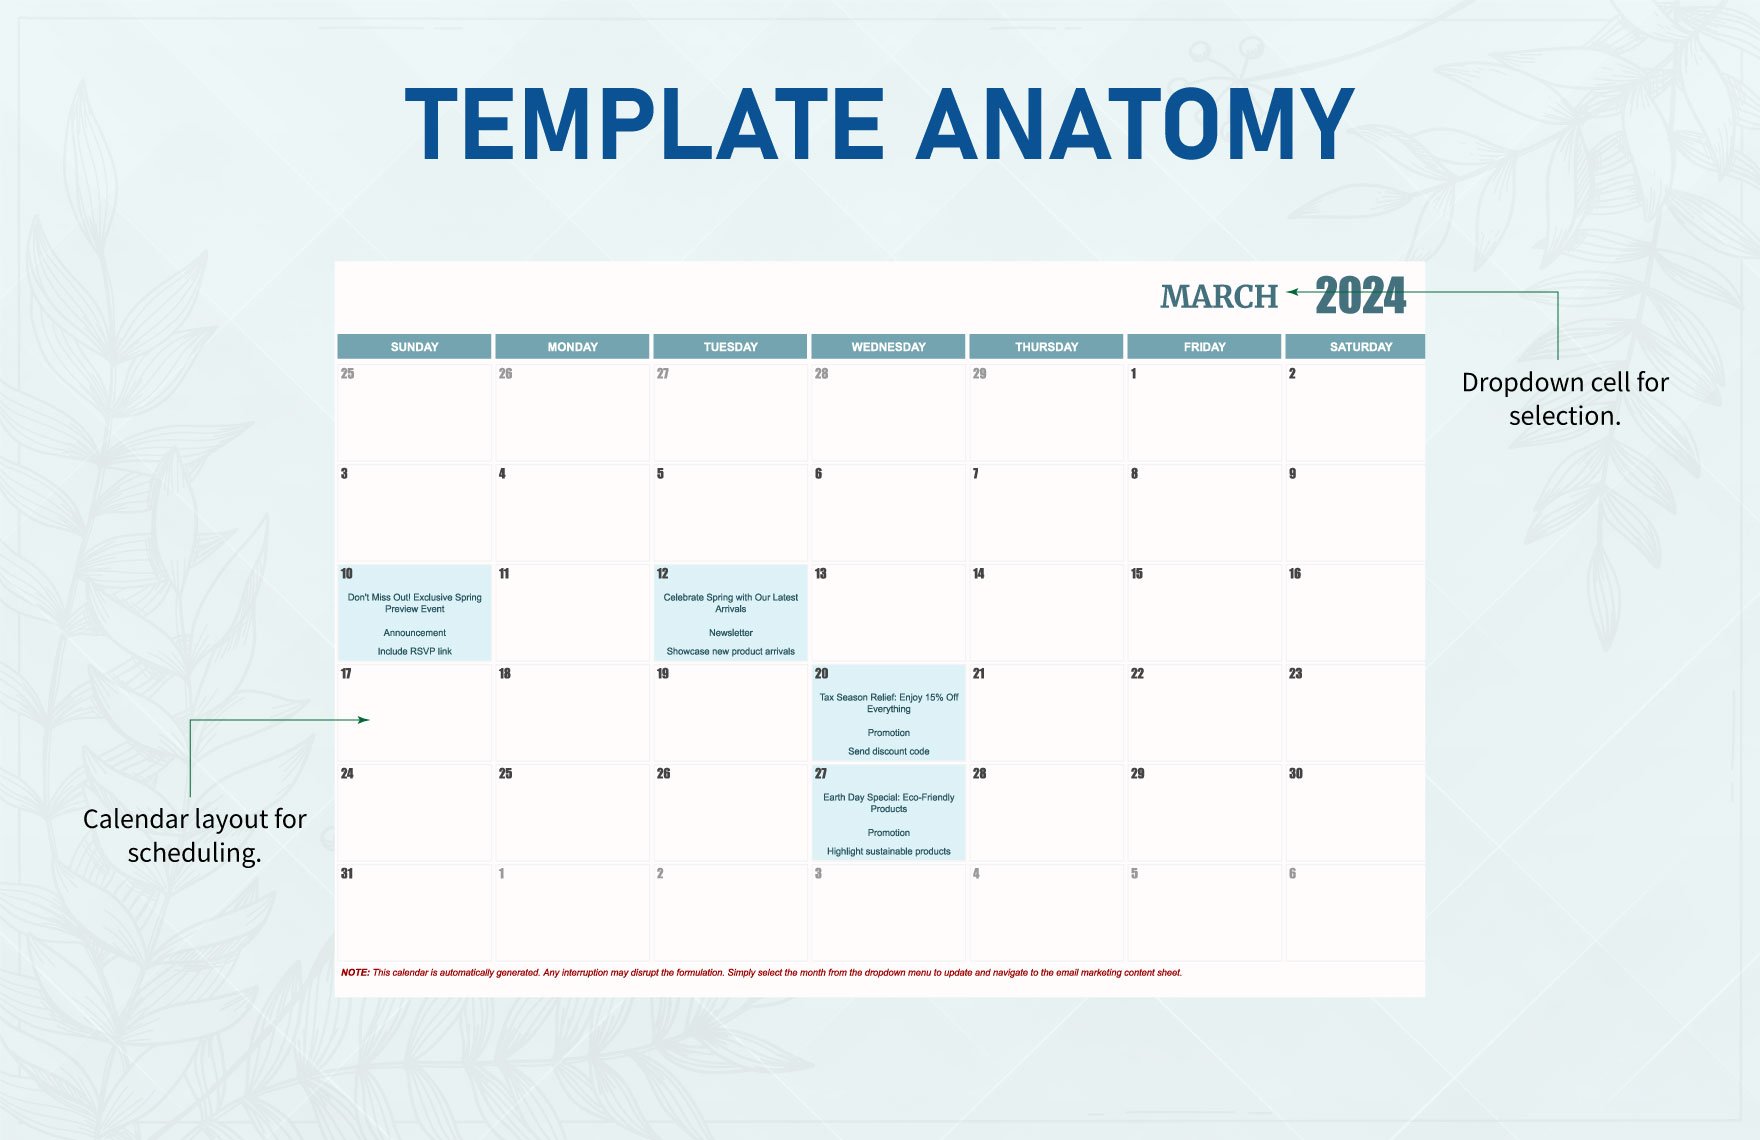 Email Marketing Content Calendar Template